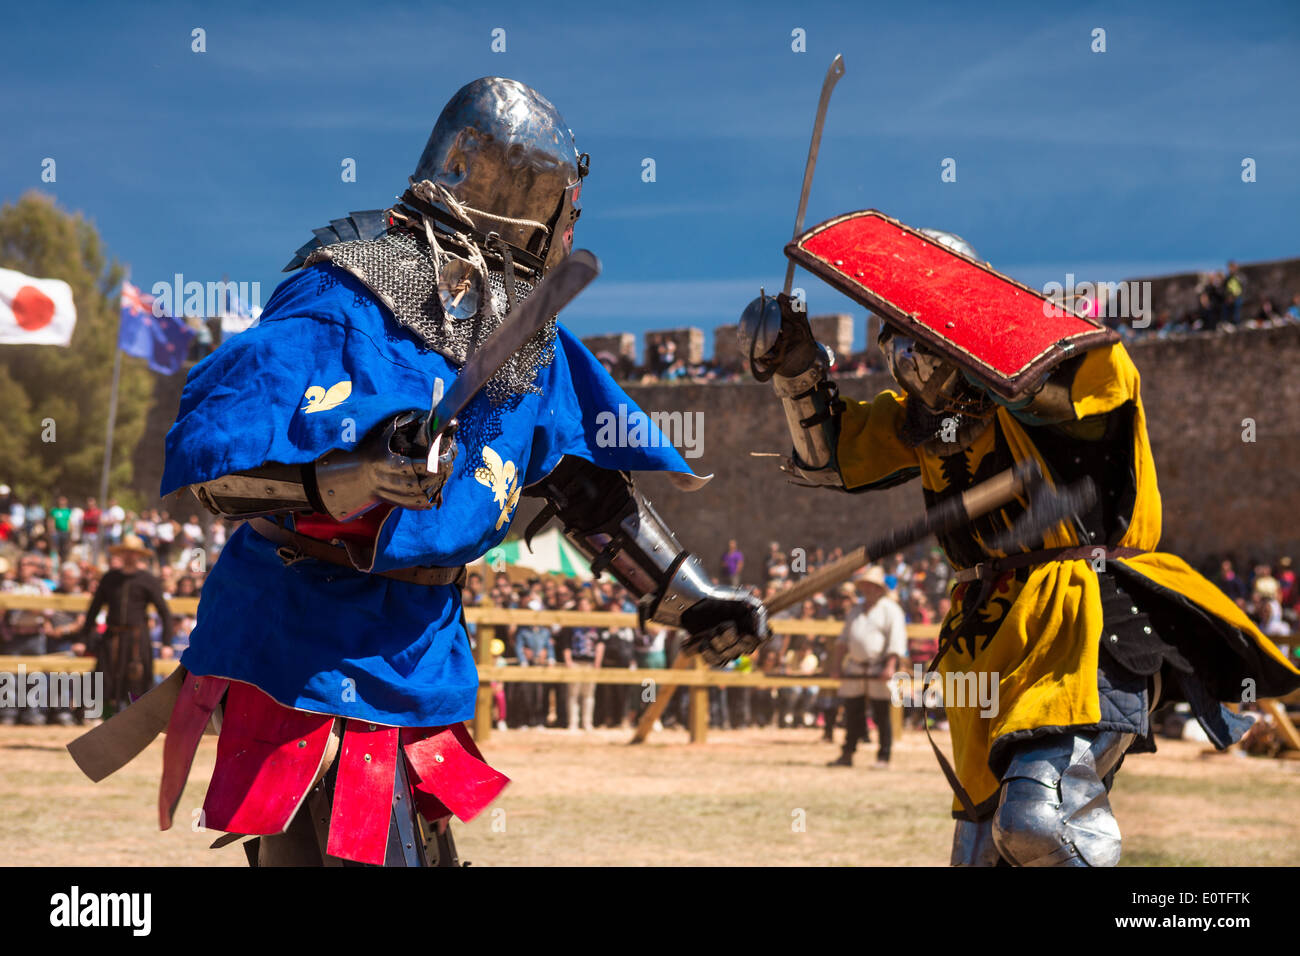 Medieval fighters in the Medieval Combat World Championship 2014 in Belmonte, Spain. France vs Germany in 1vs1 Stock Photo